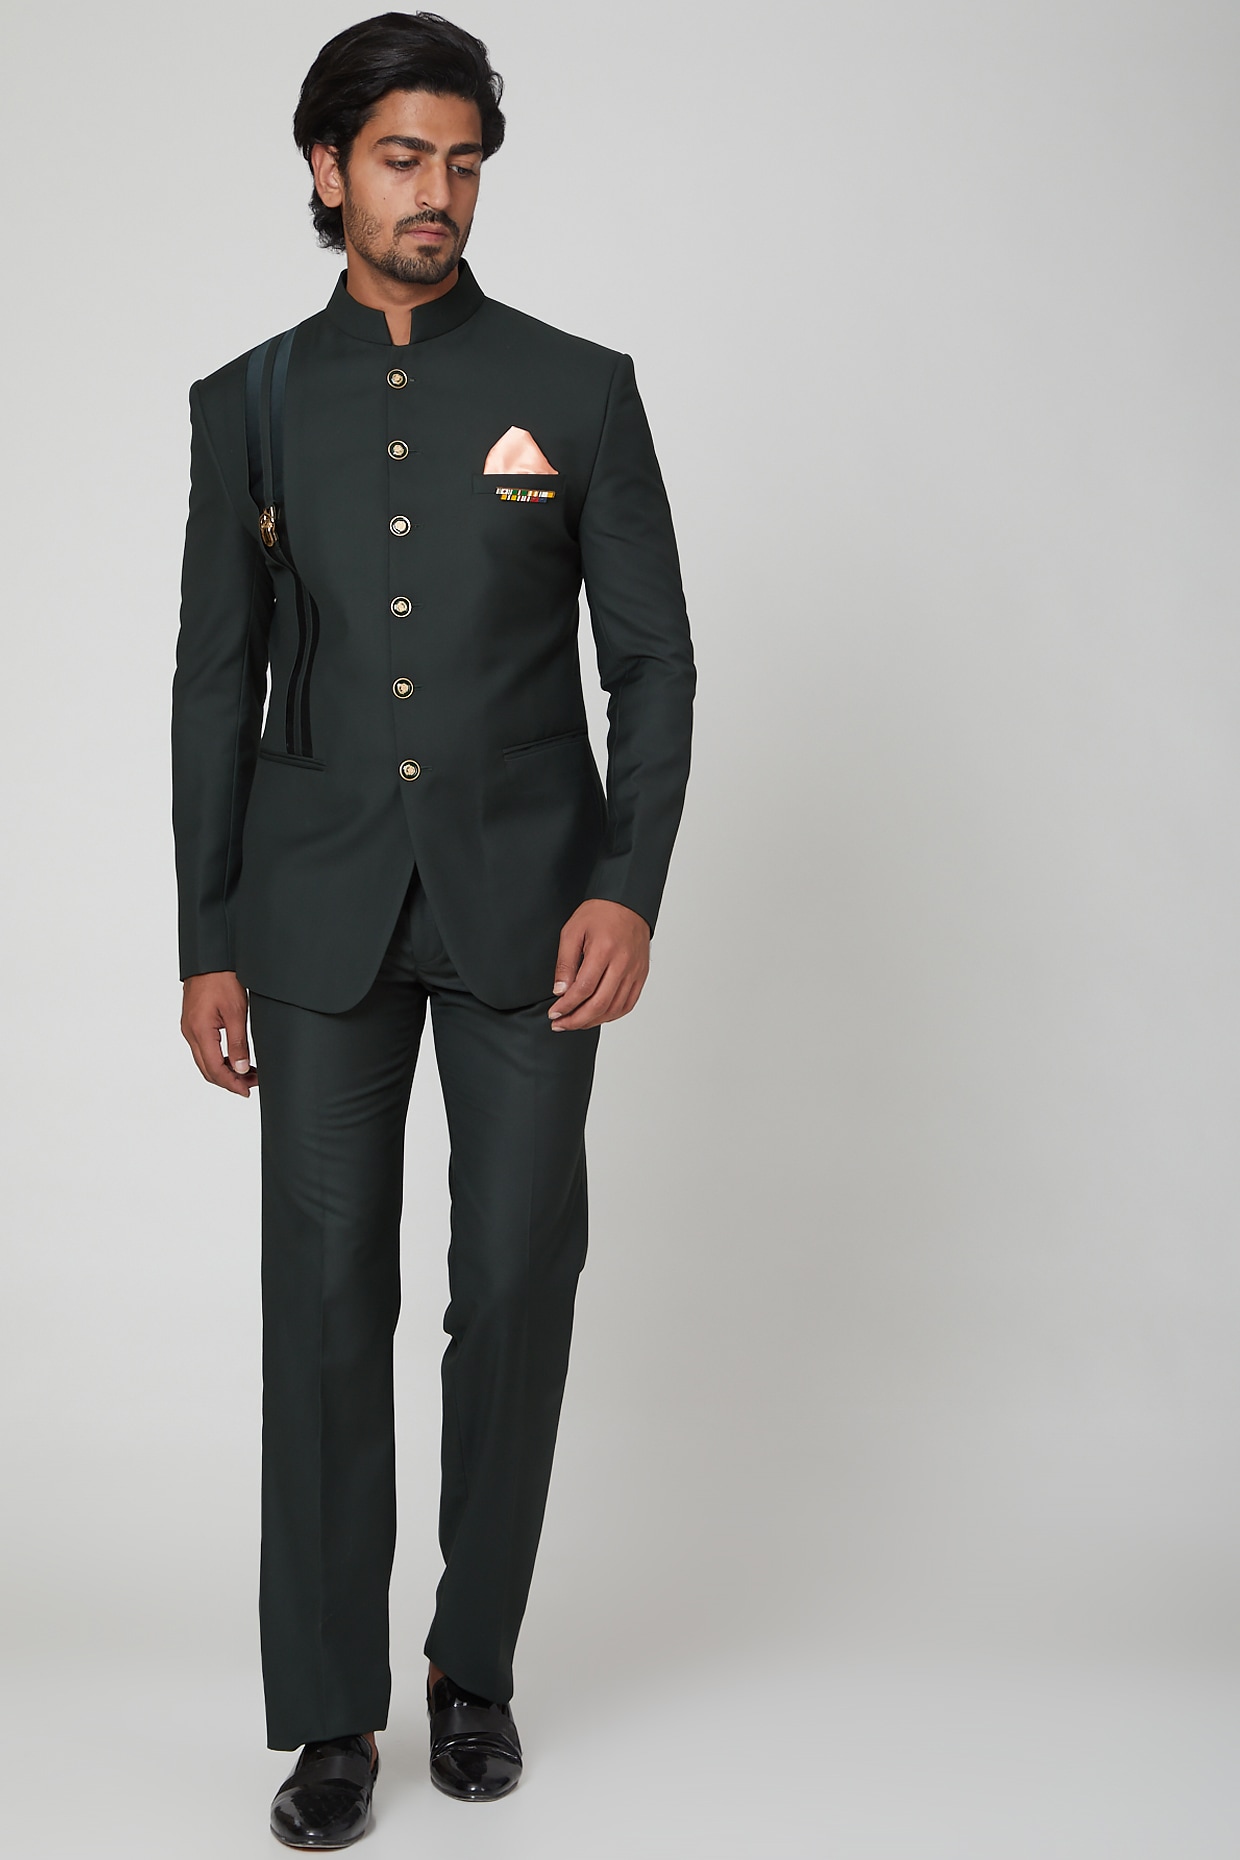 Navy Blue Jodhpuri Jacket Set In Cotton Satin Design by MR. SHAH LABEL at  Pernia's Pop Up Shop 2024